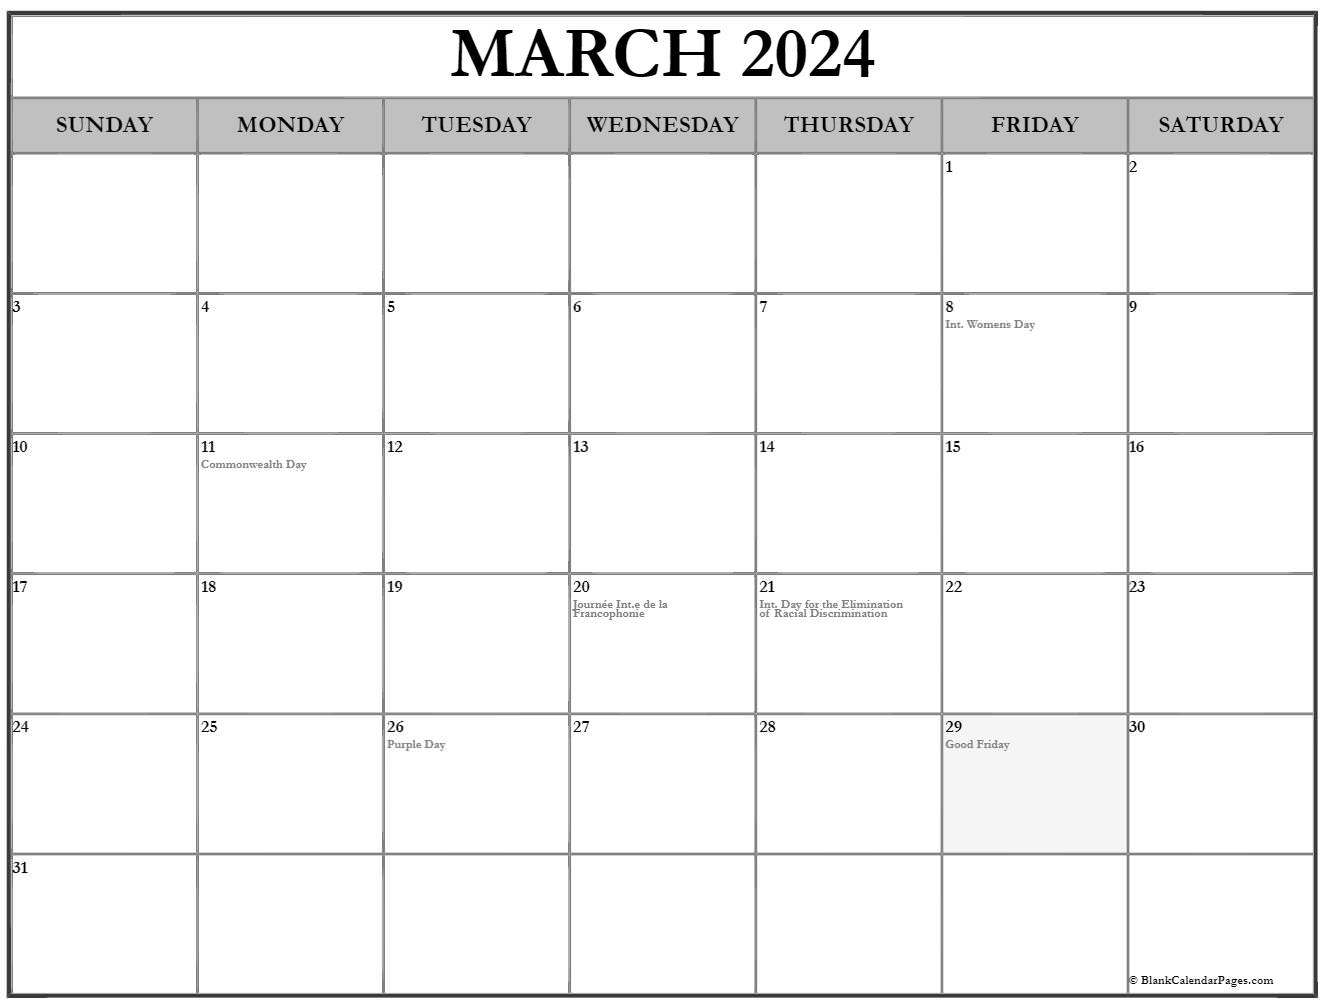 March 2024 Holidays And Observances Calendar Fern Orelie